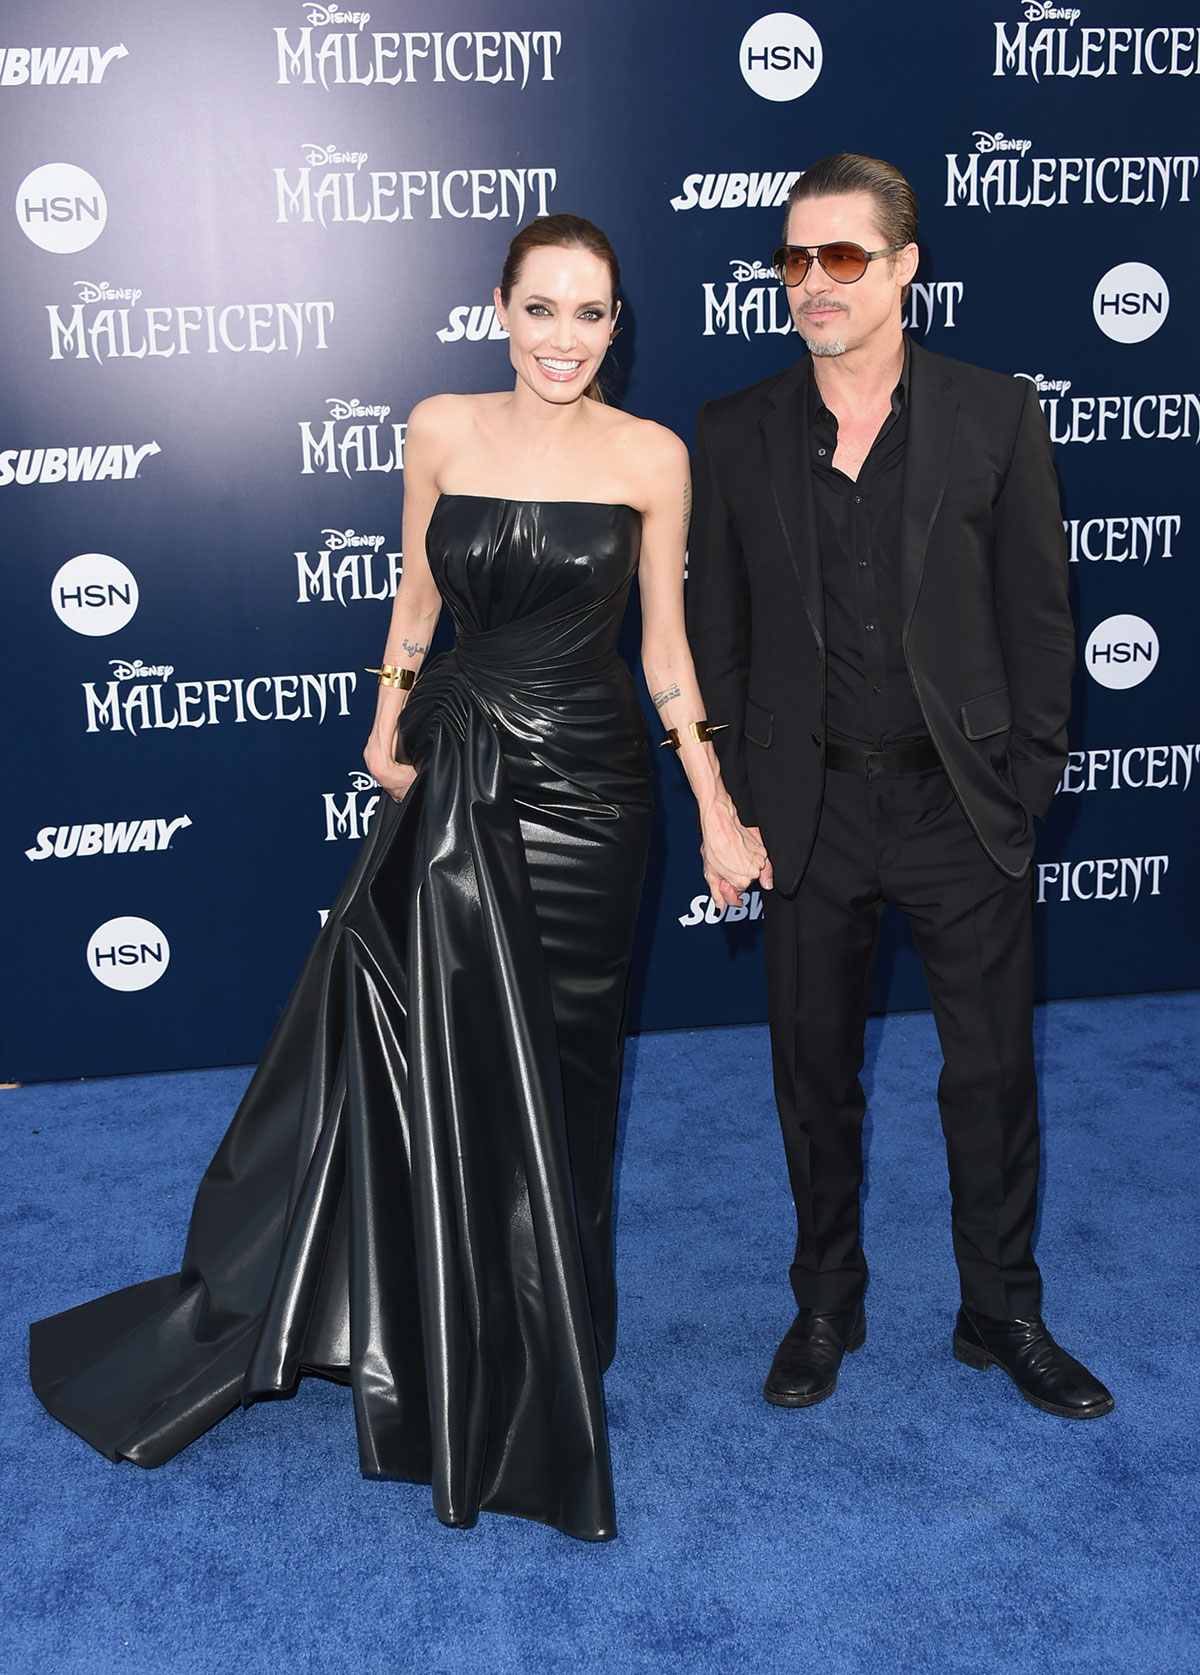 Angelina Jolie attends World Premiere of Disney Maleficent